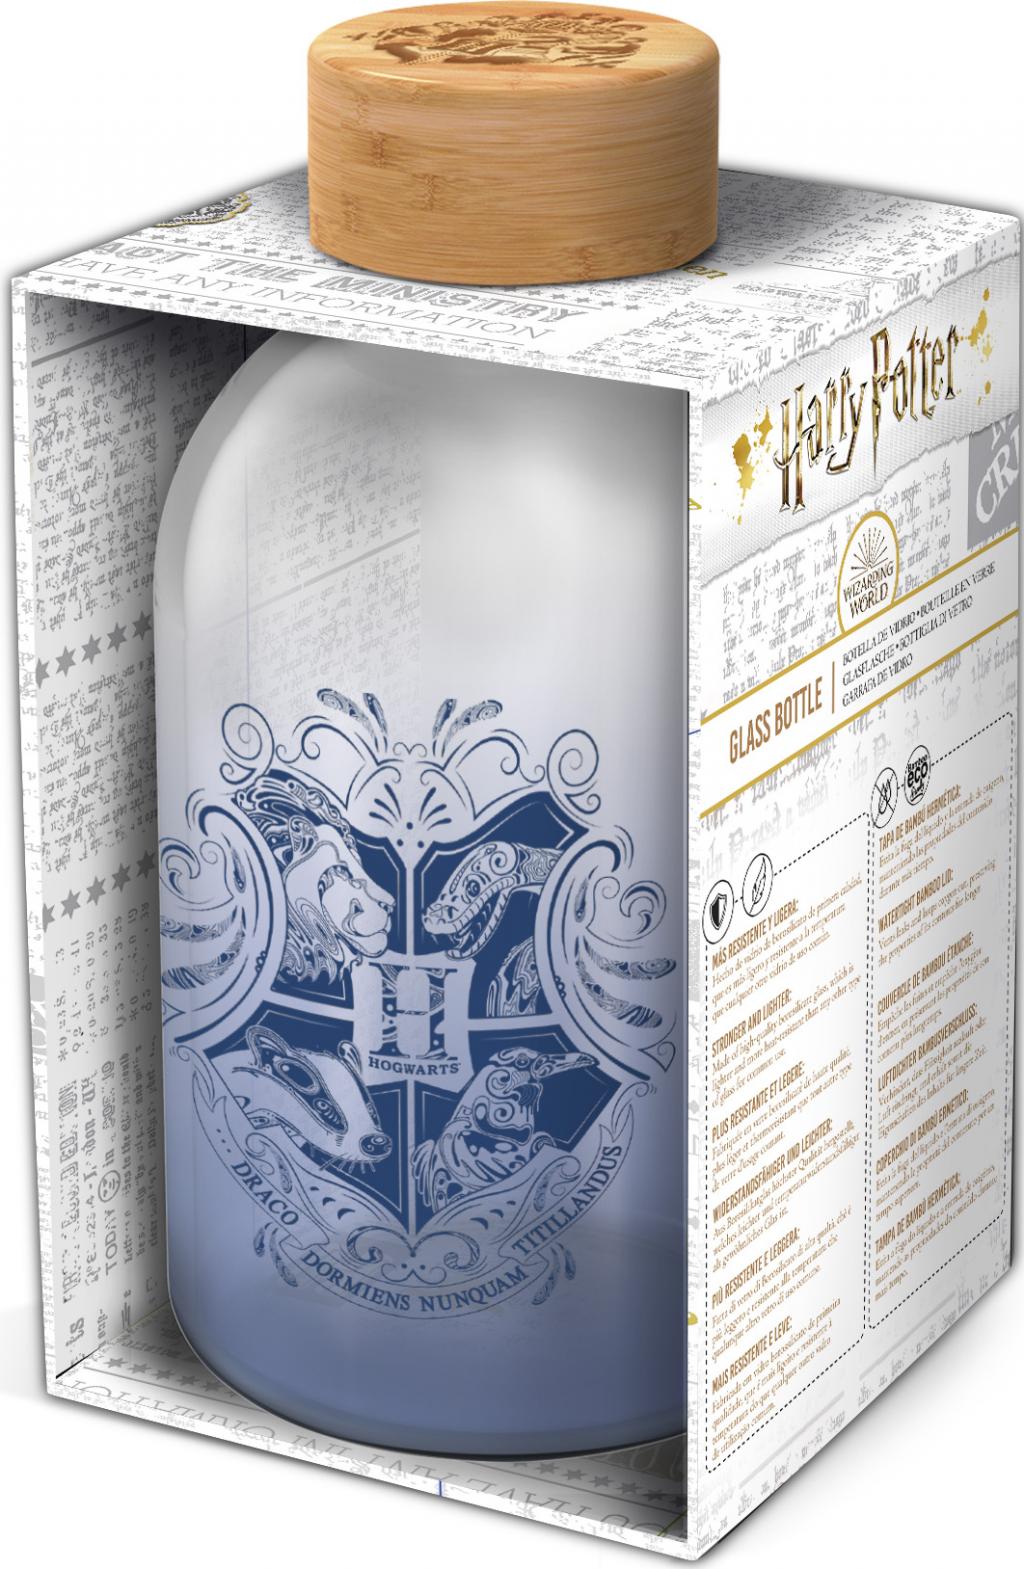 HARRY POTTER - Hogwarts - Glass bottle - Small Size 620ml